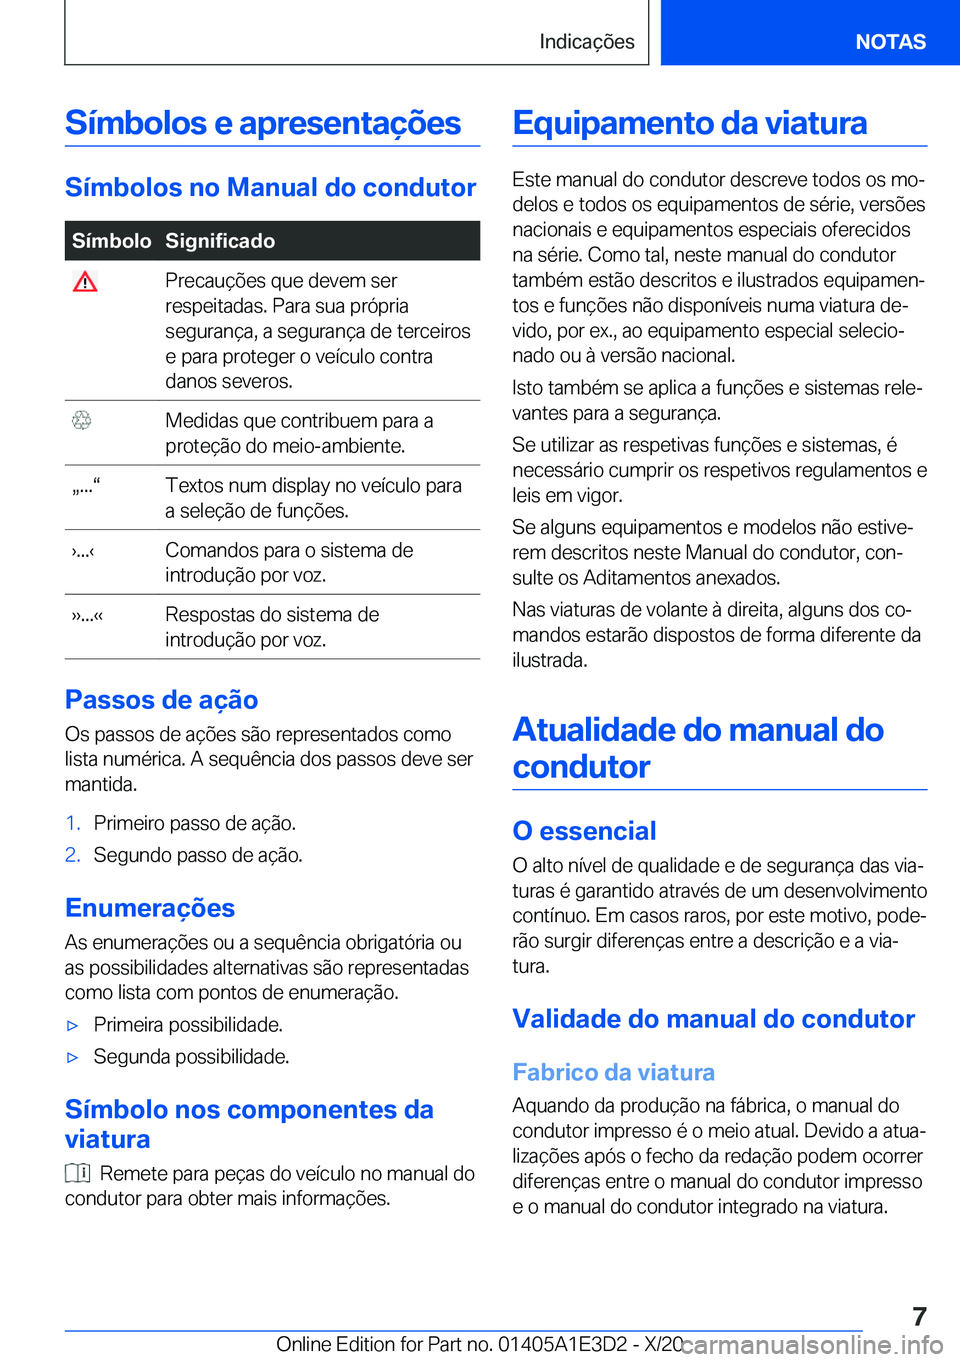 BMW M4 2021  Manual do condutor (in Portuguese) �S�